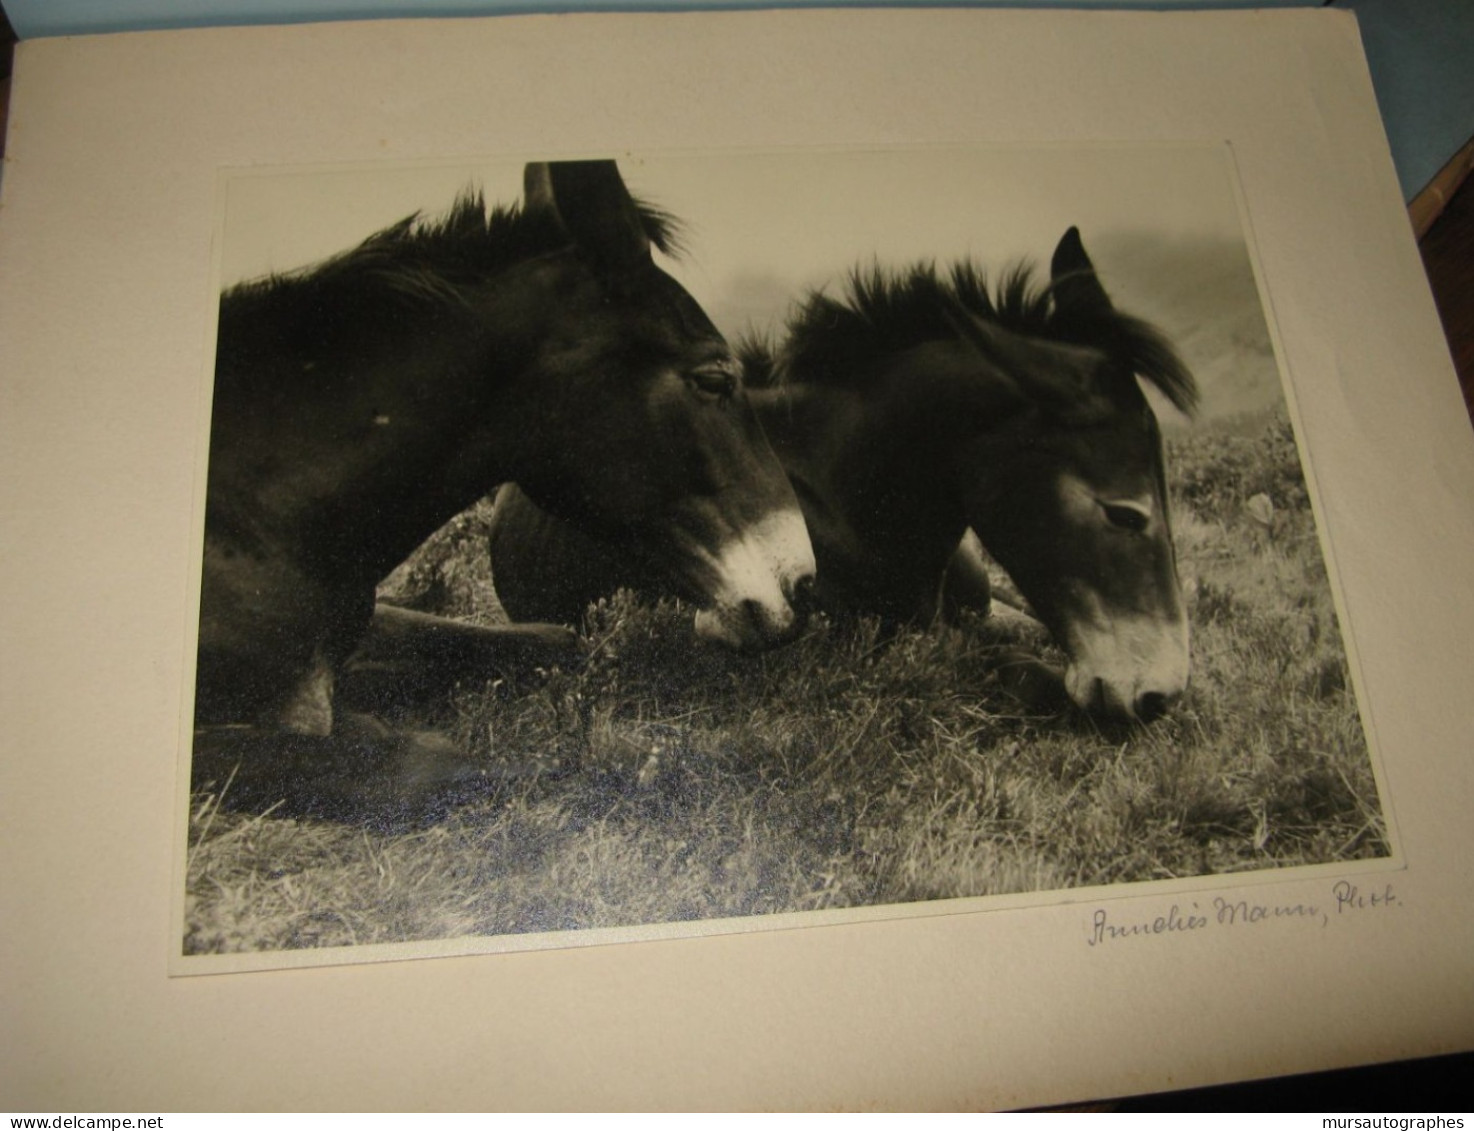 BELLE PHOTOGRAPHIE N&B "DEUX MULETS" Vers 1940-50 Signé ANNELIES MANN - Gehandtekende Foto's